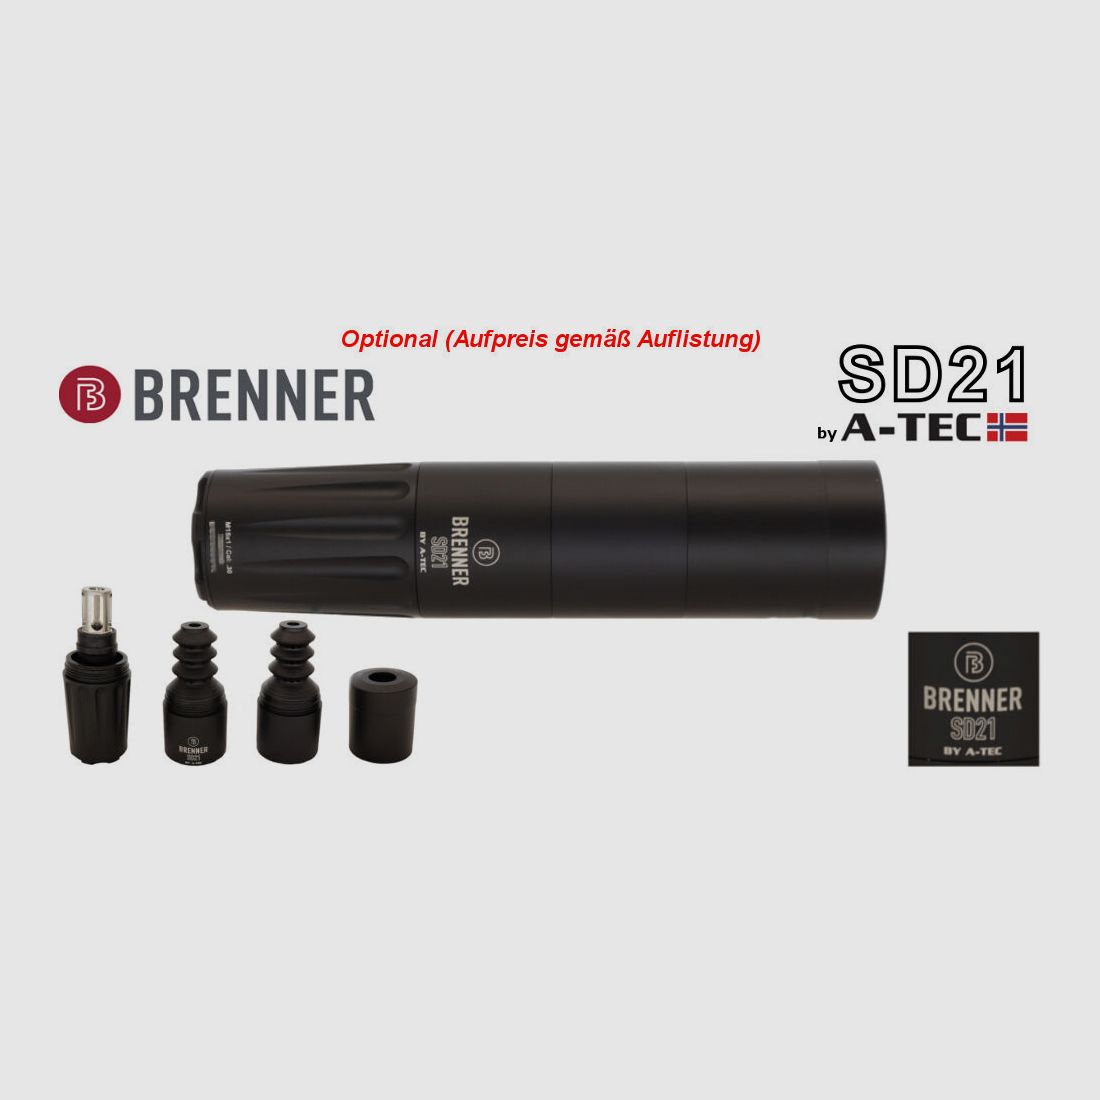 Brenner Komplettpaket:	 Brenner BR20 Walnuss mit Zeiss V4 3-12x56